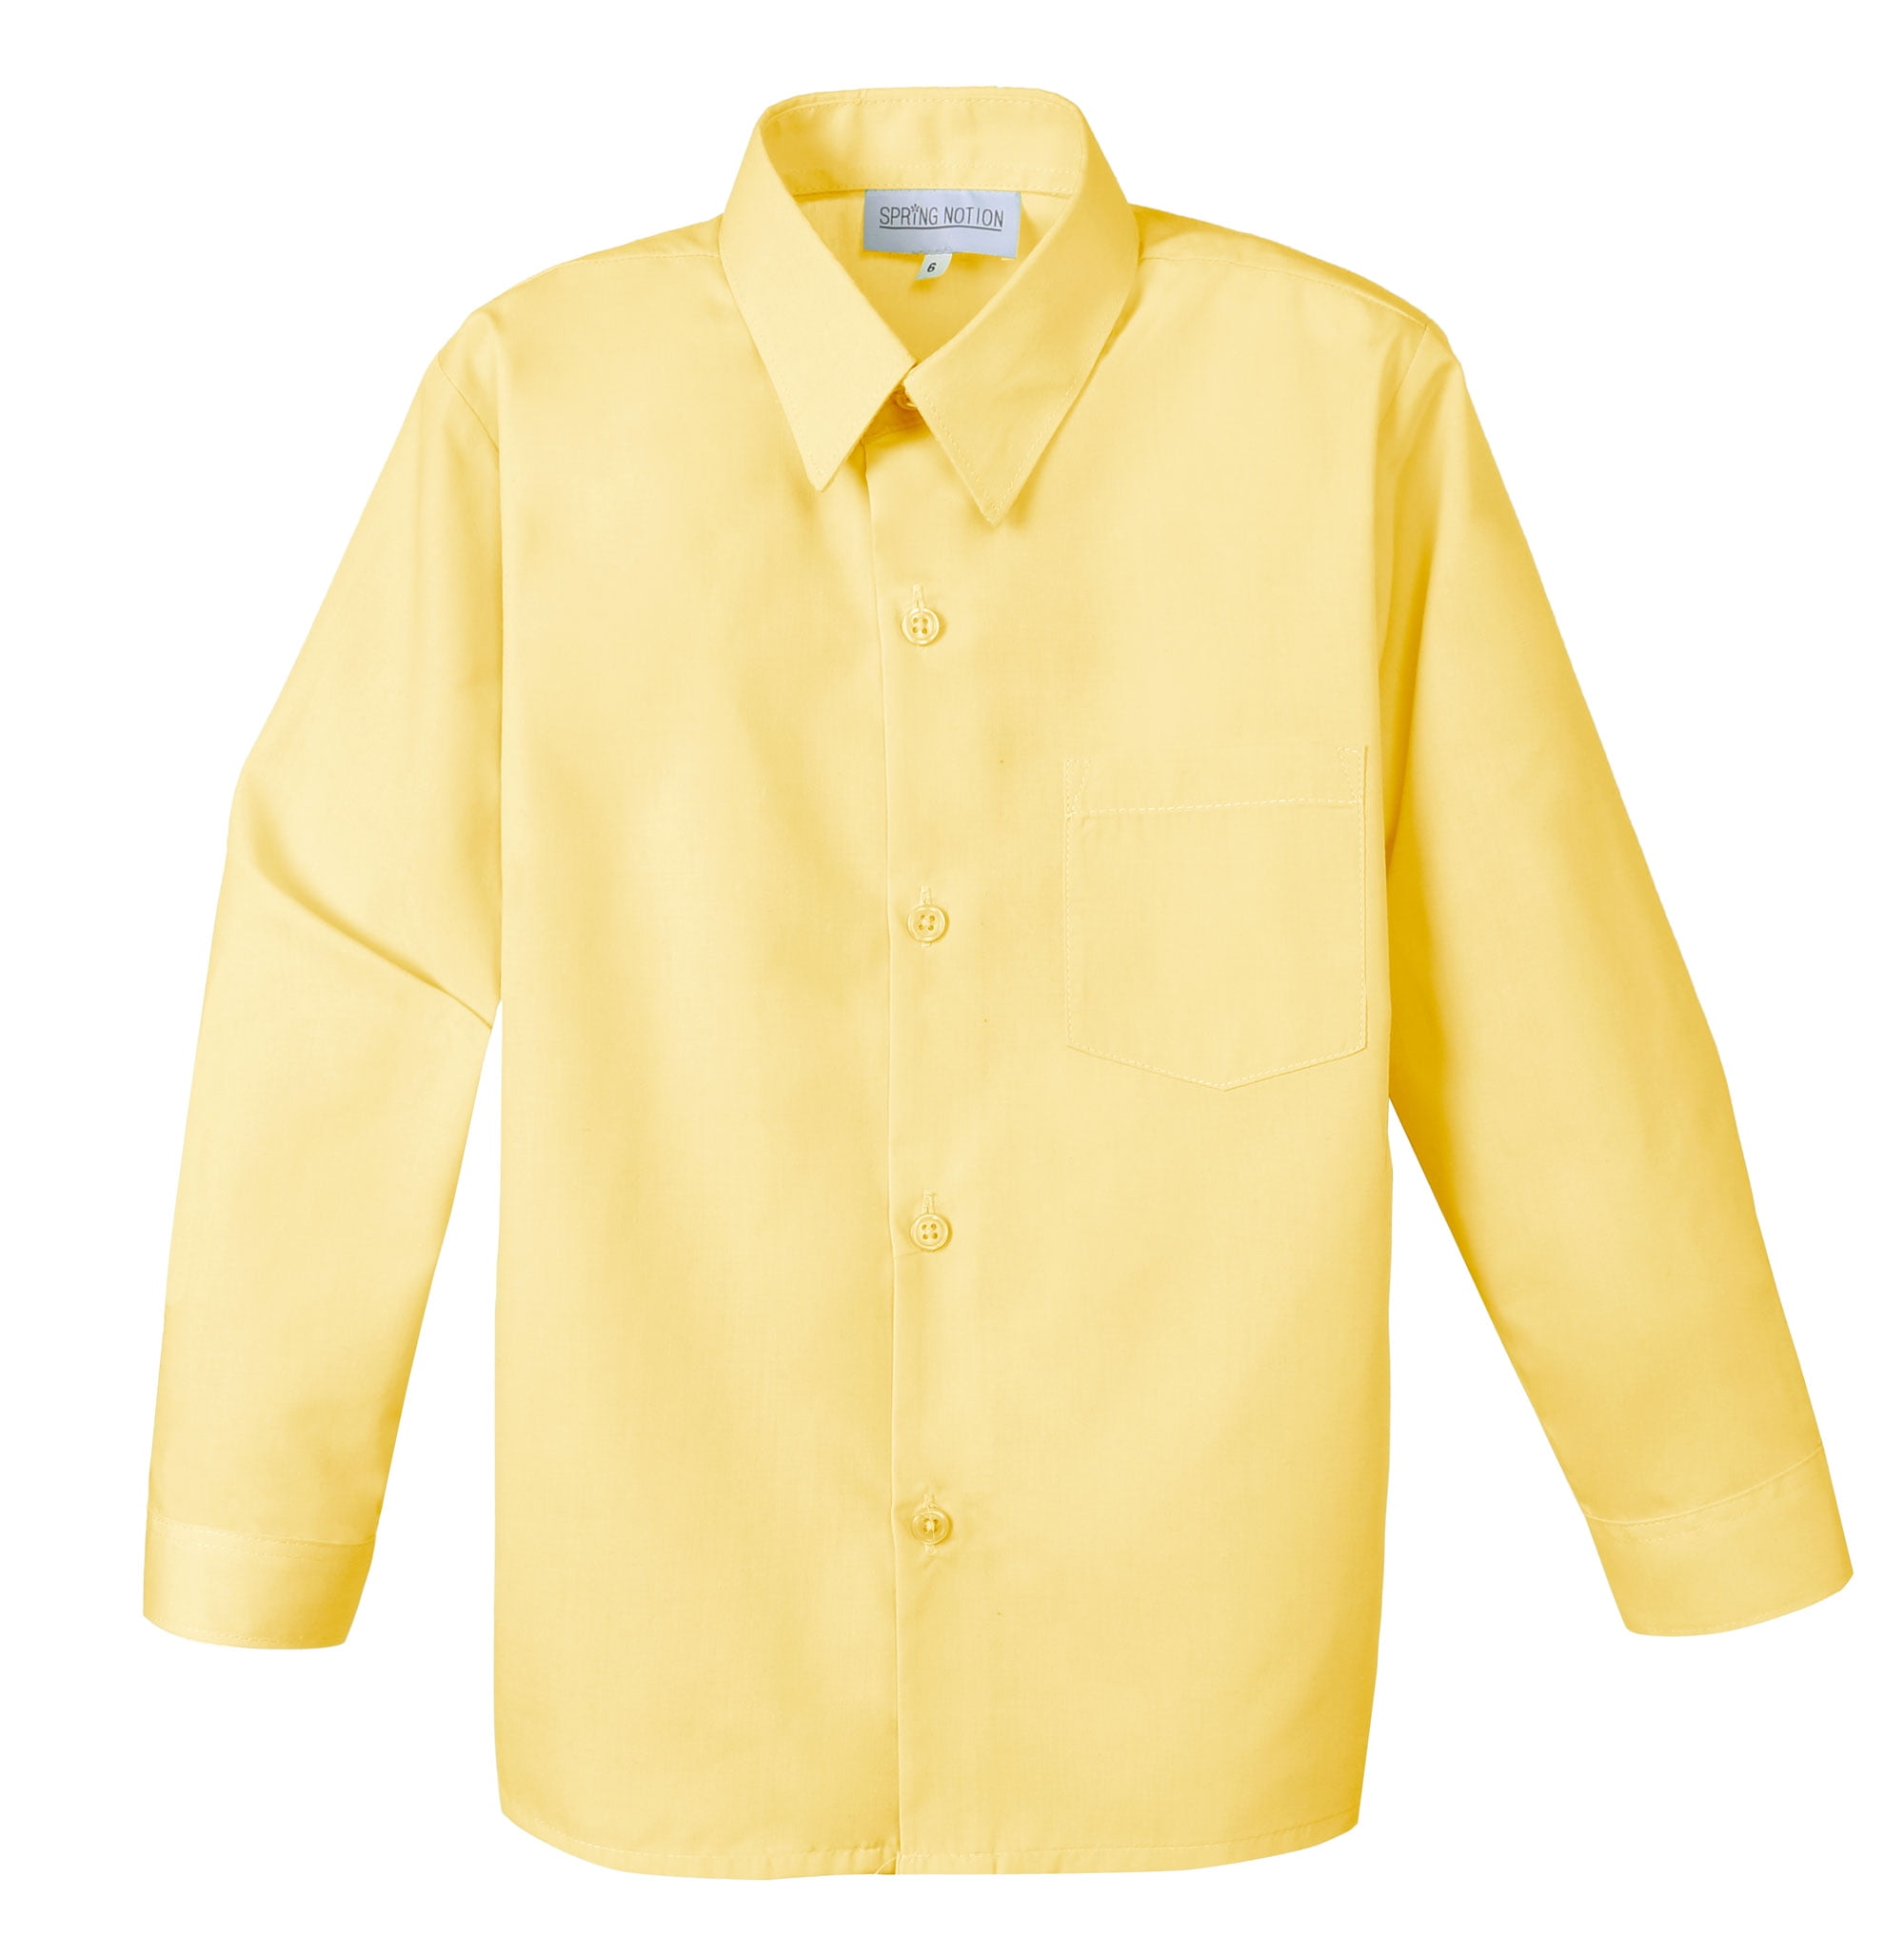 Boys Button-down Shirts - Walmart.com ...